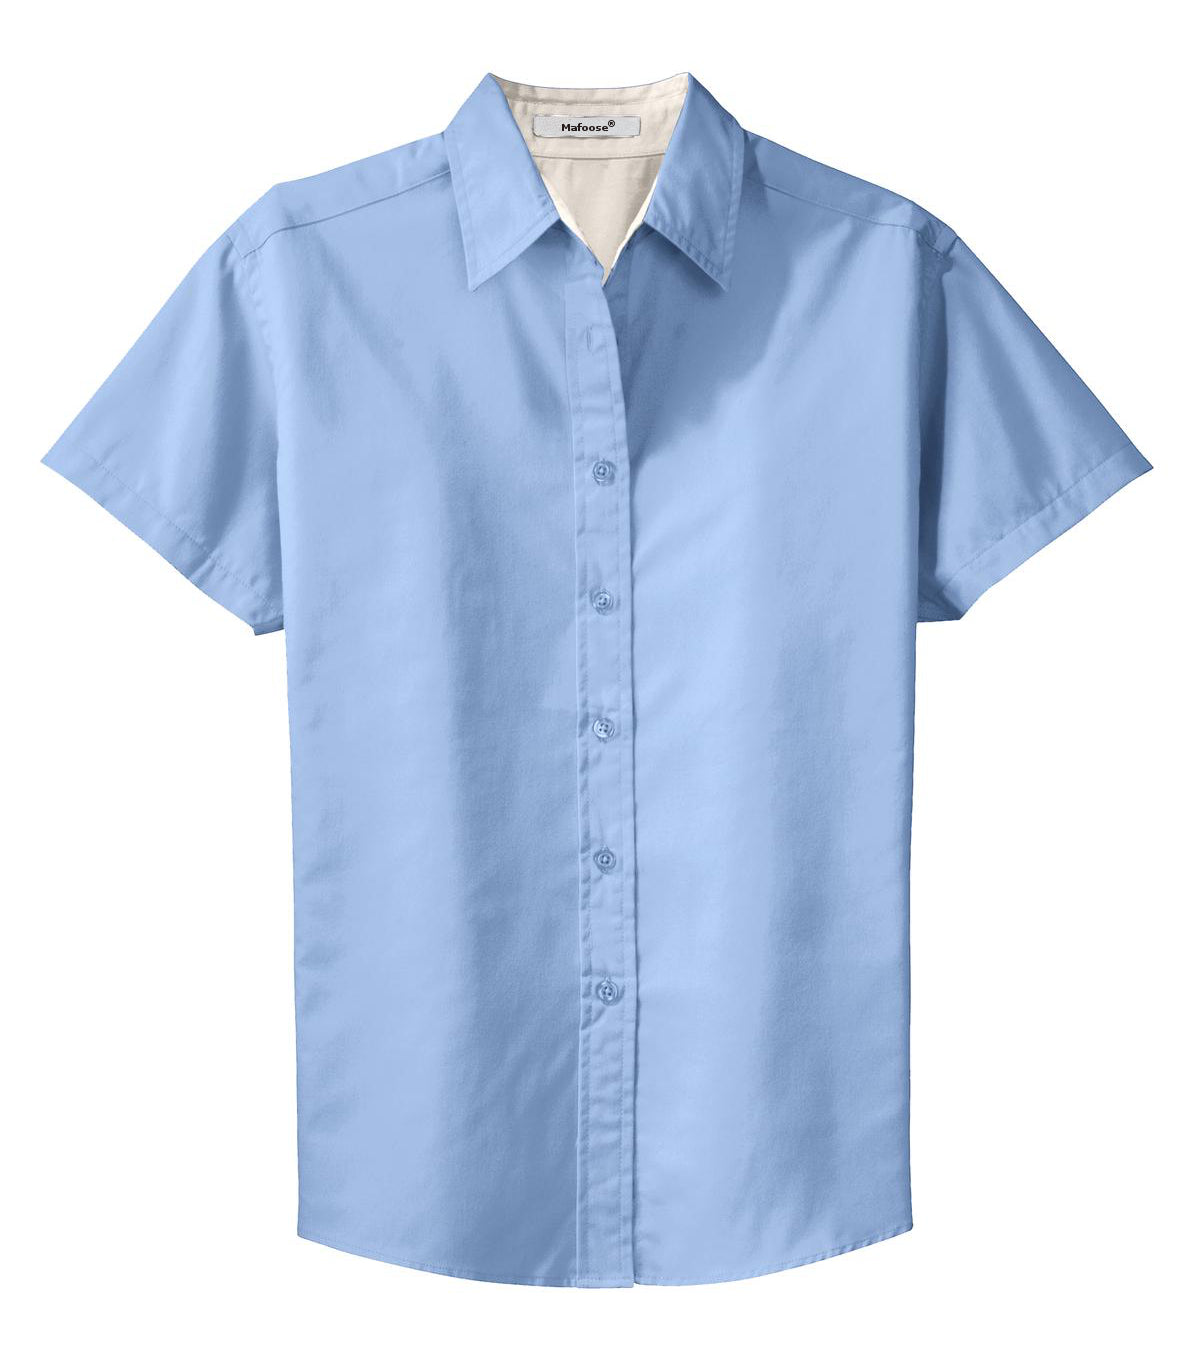 Mafoose Women's Comfortable Short Sleeve Easy Care Shirt Light Blue/Light Stone-Front